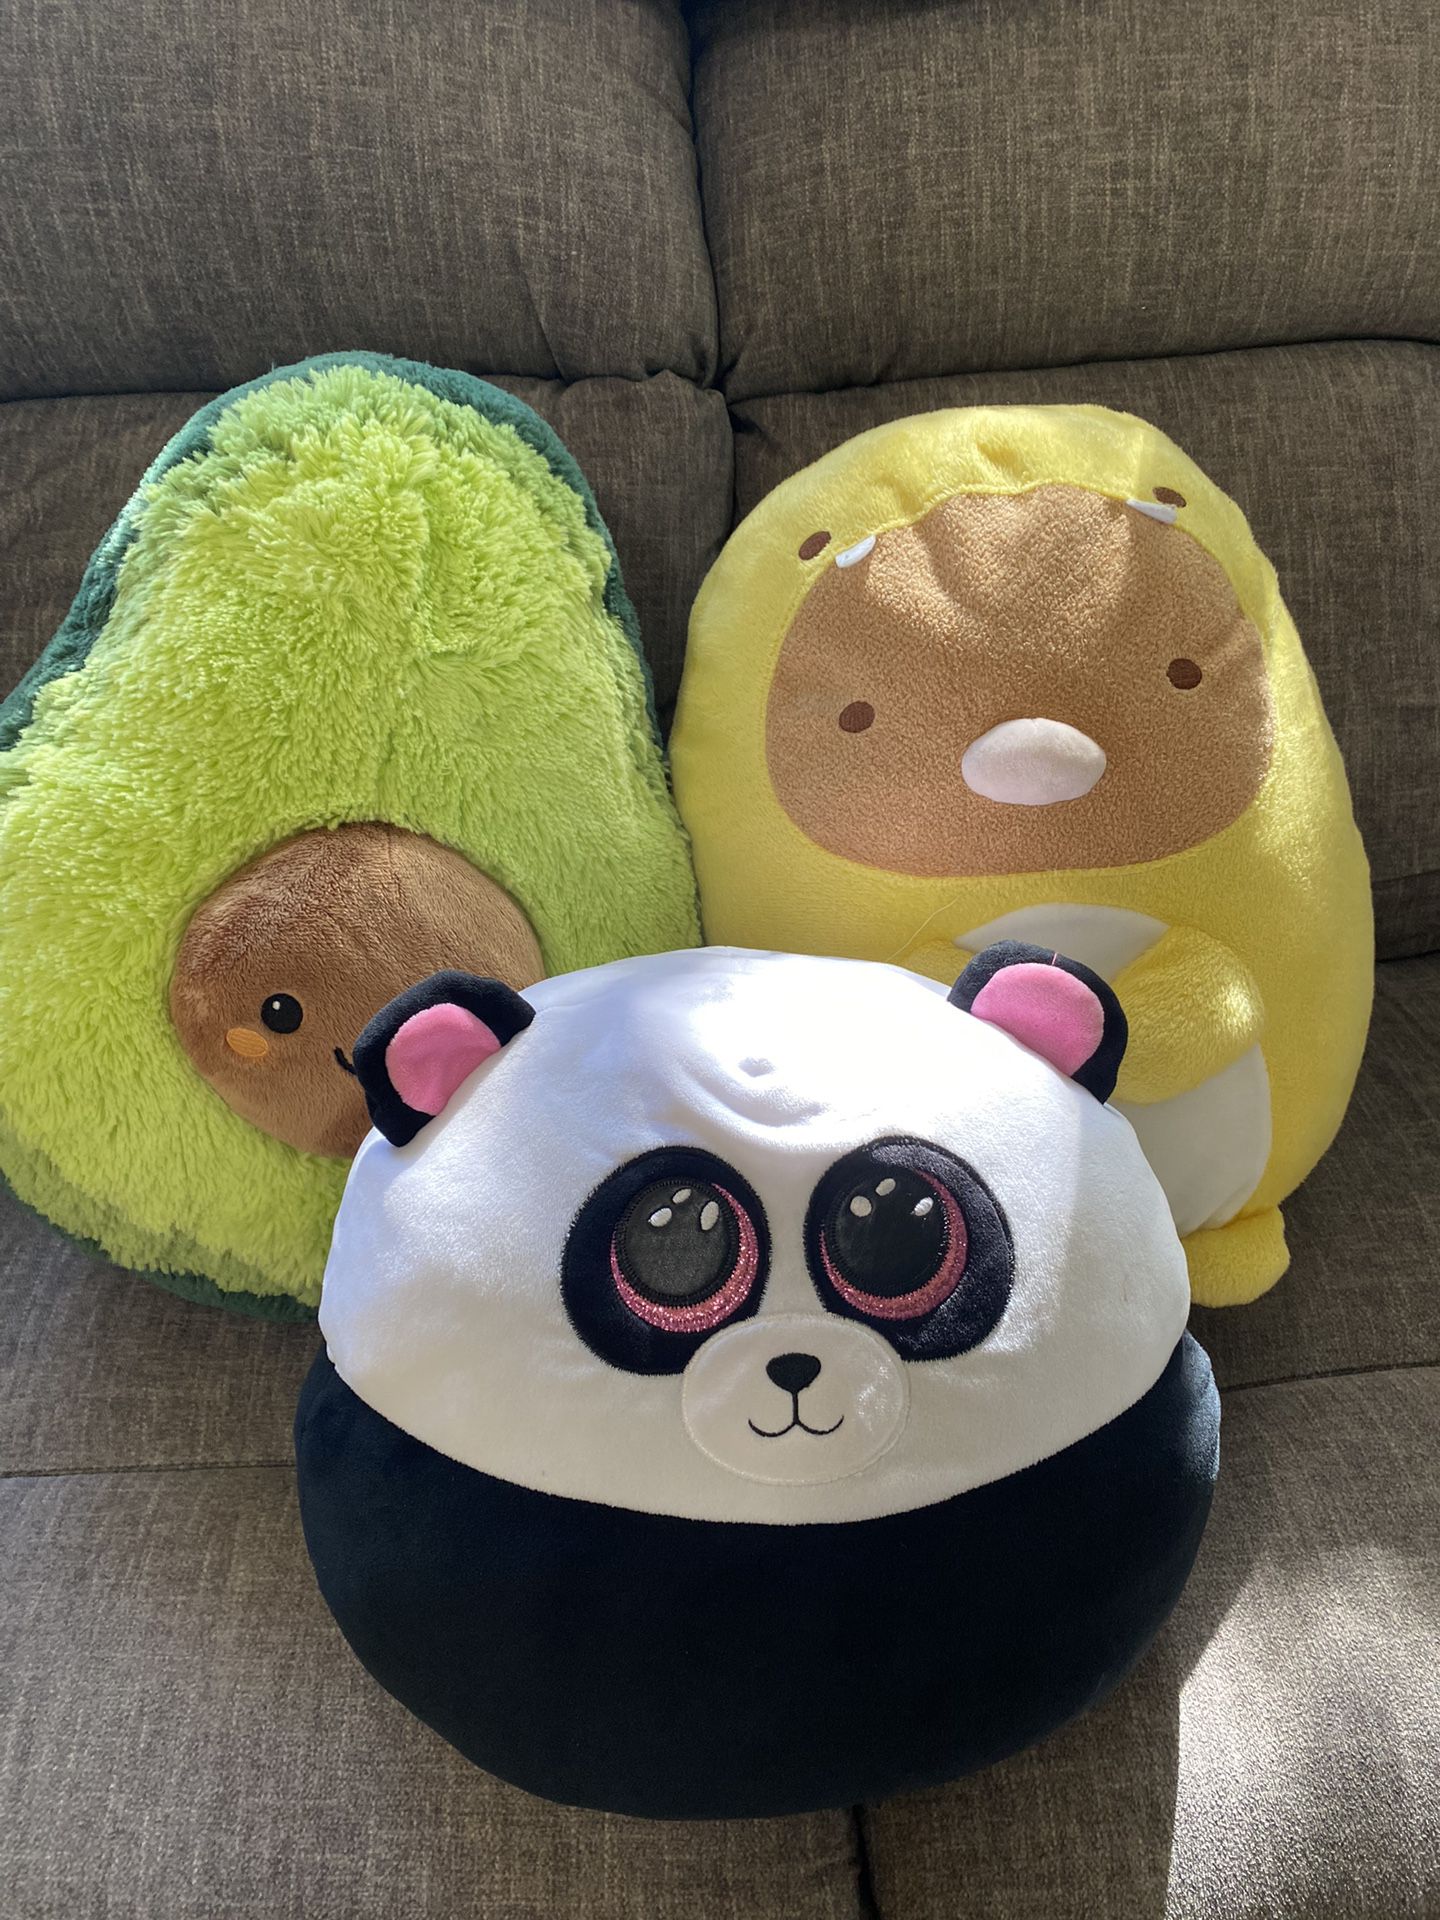 All 3 Stuffed Animals Bundle 